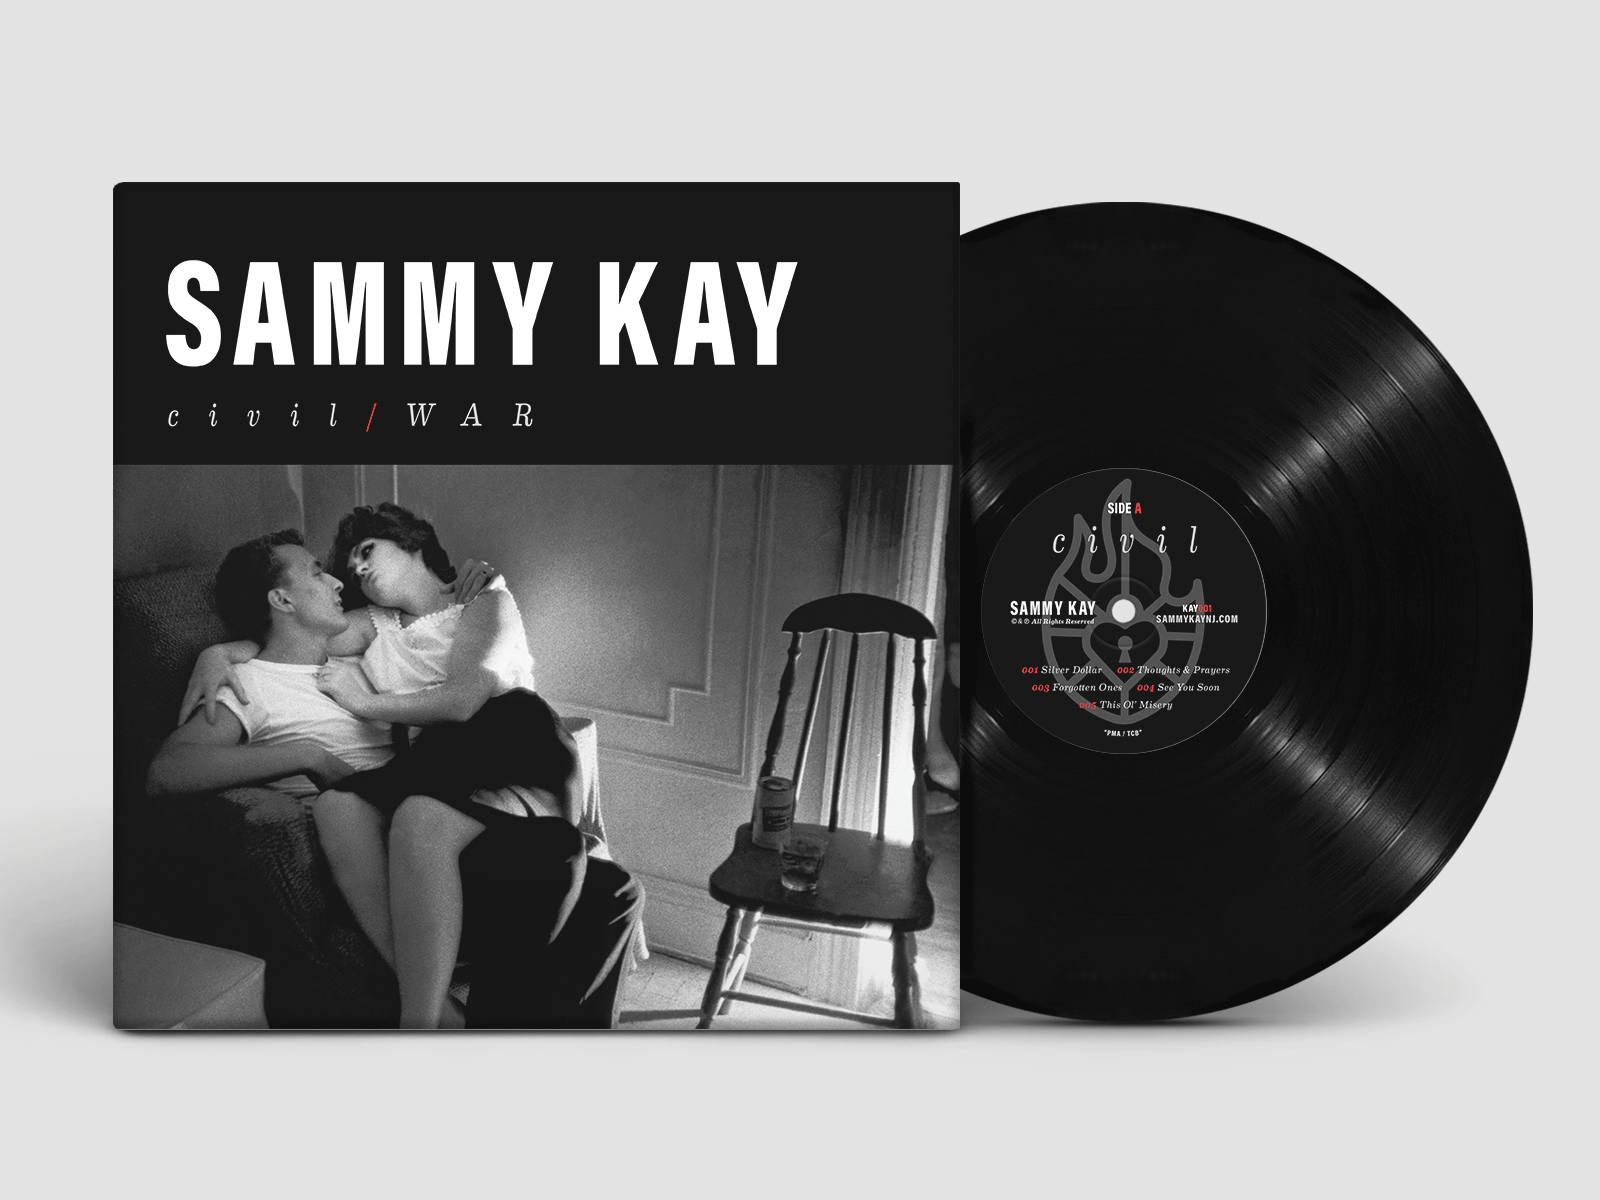 Sammy Kay - Civil/WAR Vinyl Packaging album candle civil flame grandparents heart hope key locket mental health packaging records sammy kay vinyl war